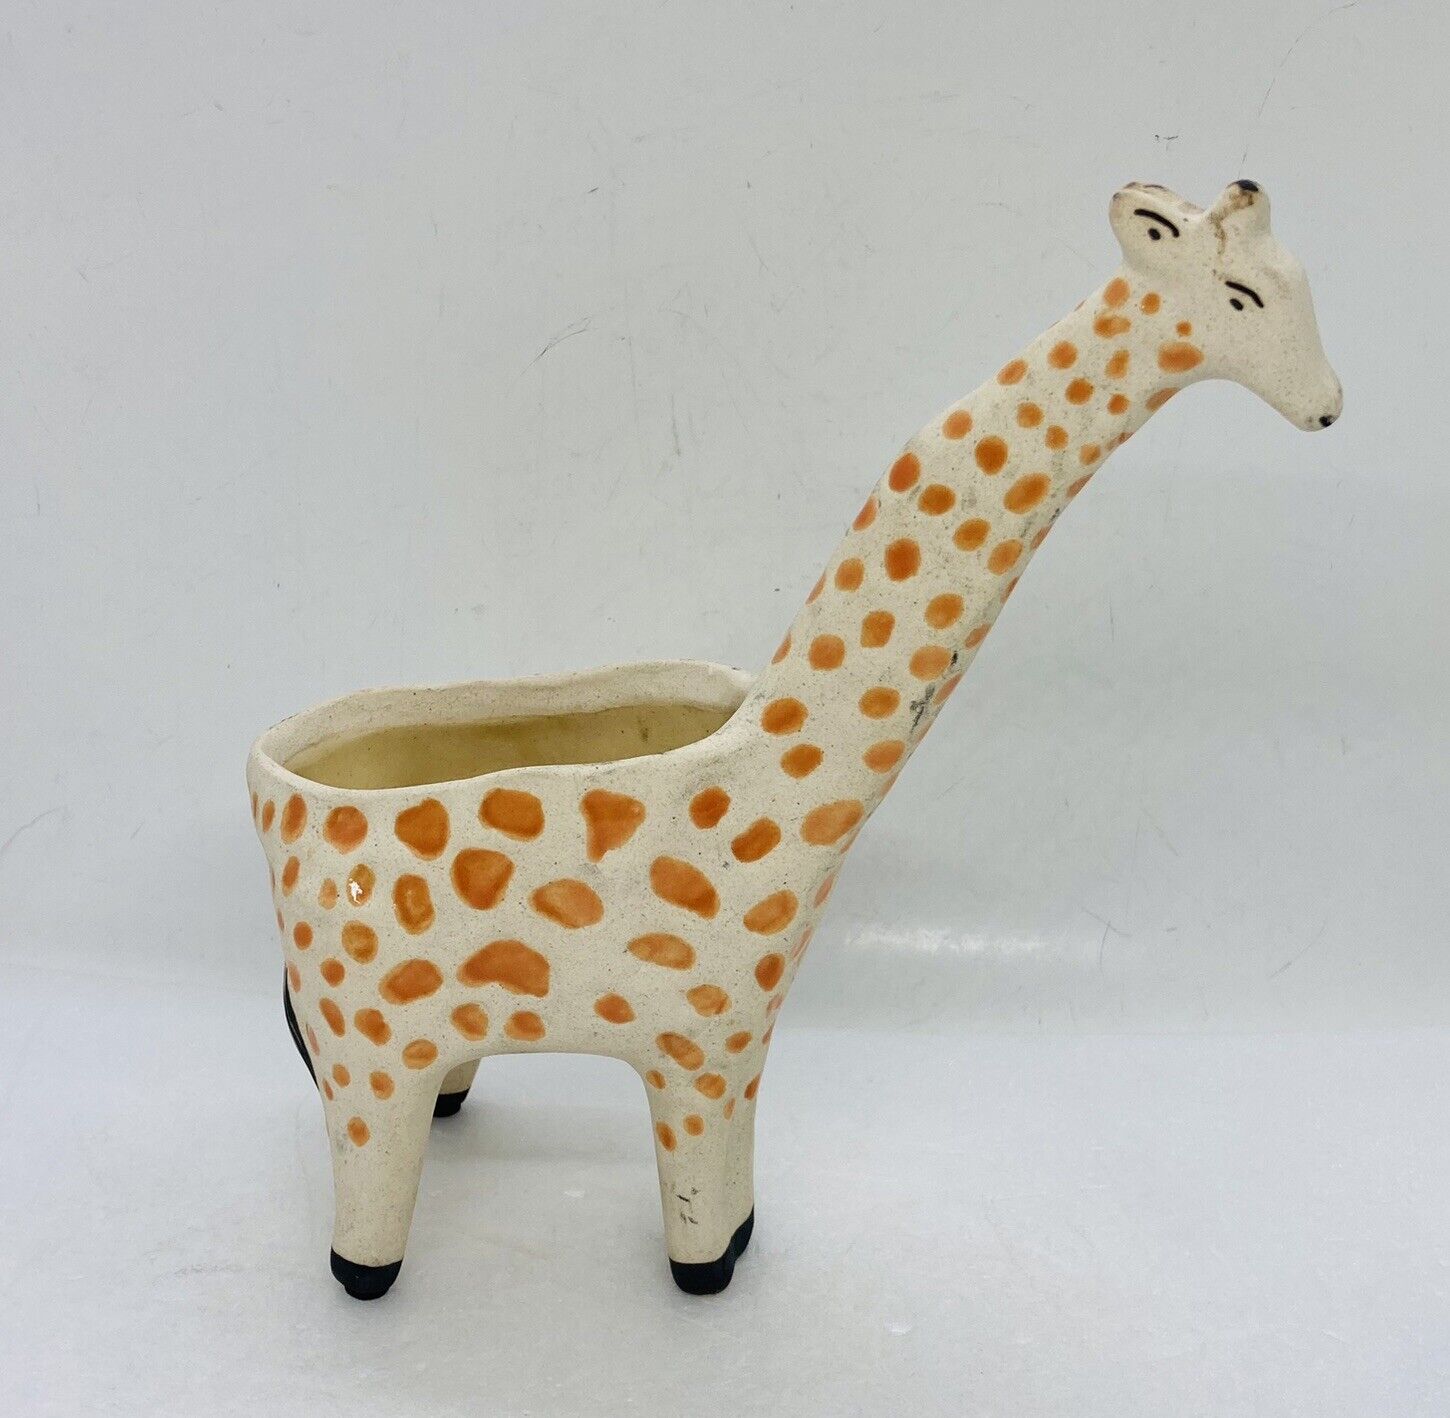 Anthropologie Leah Reena Goren Giraffe Pottery Planter Cute Home Art Decor X1